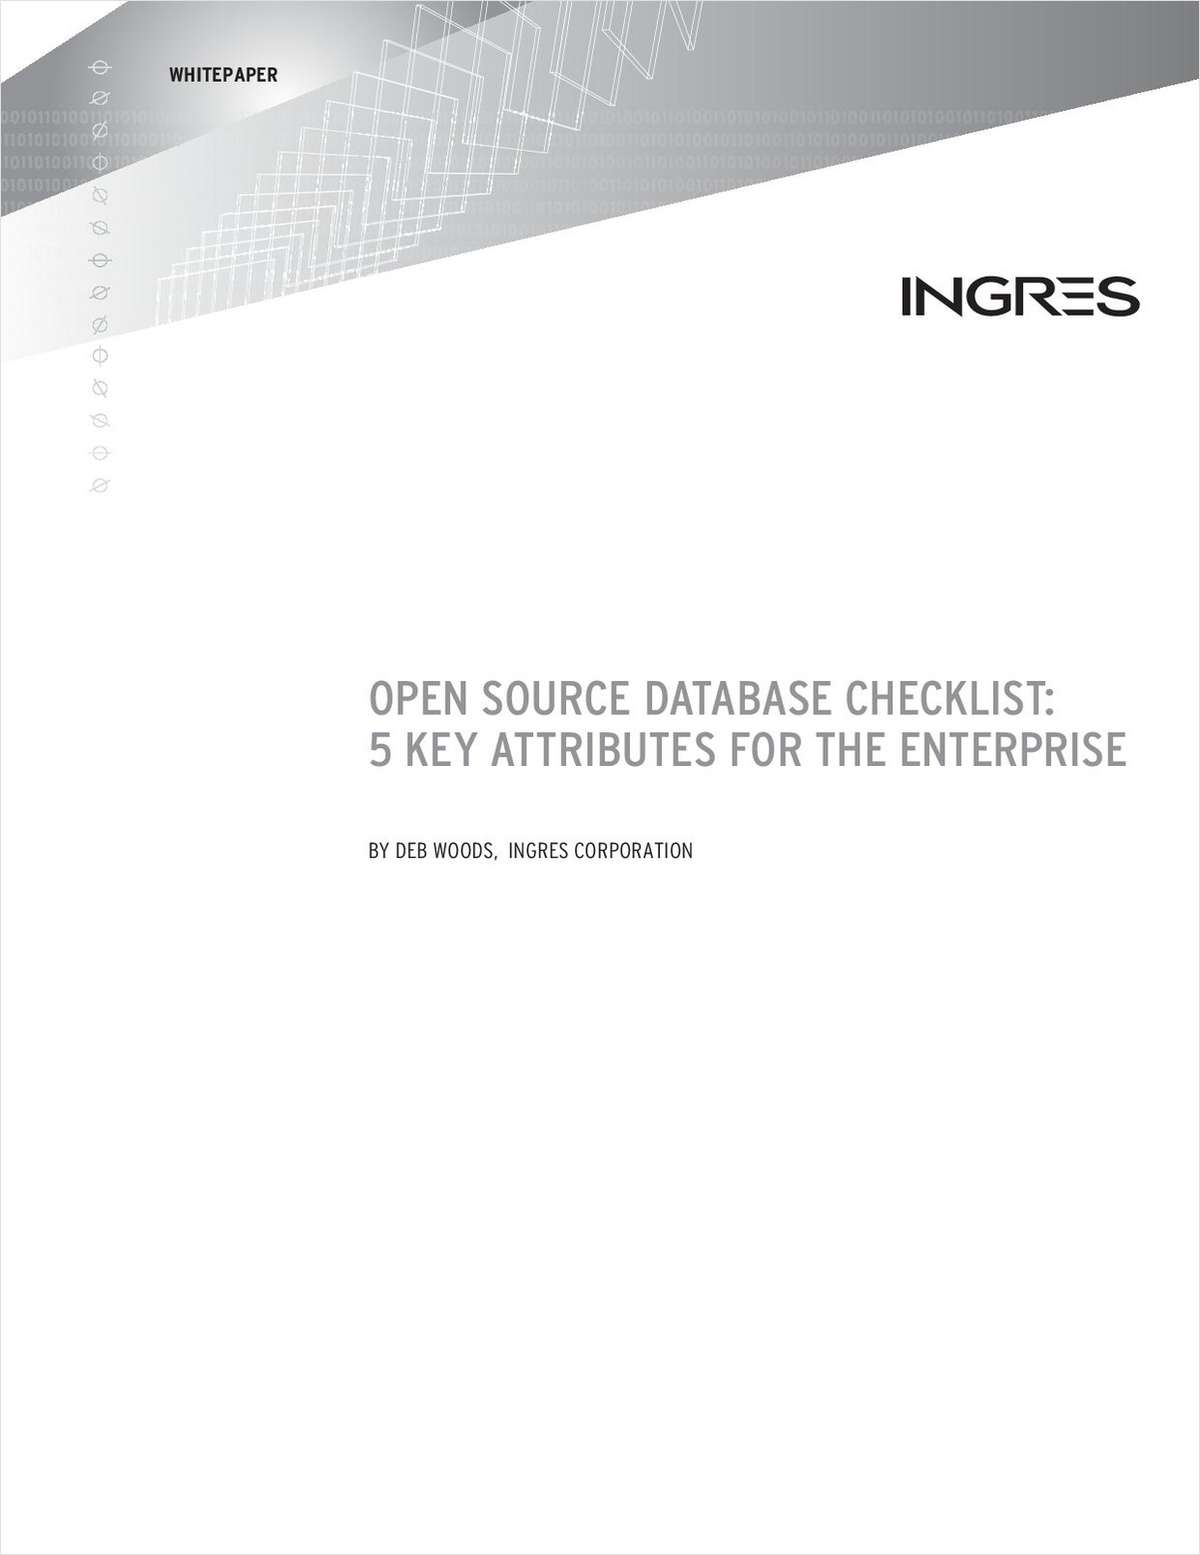 Open Source Database Checklist: 5 Key Attributes for the Enterprise